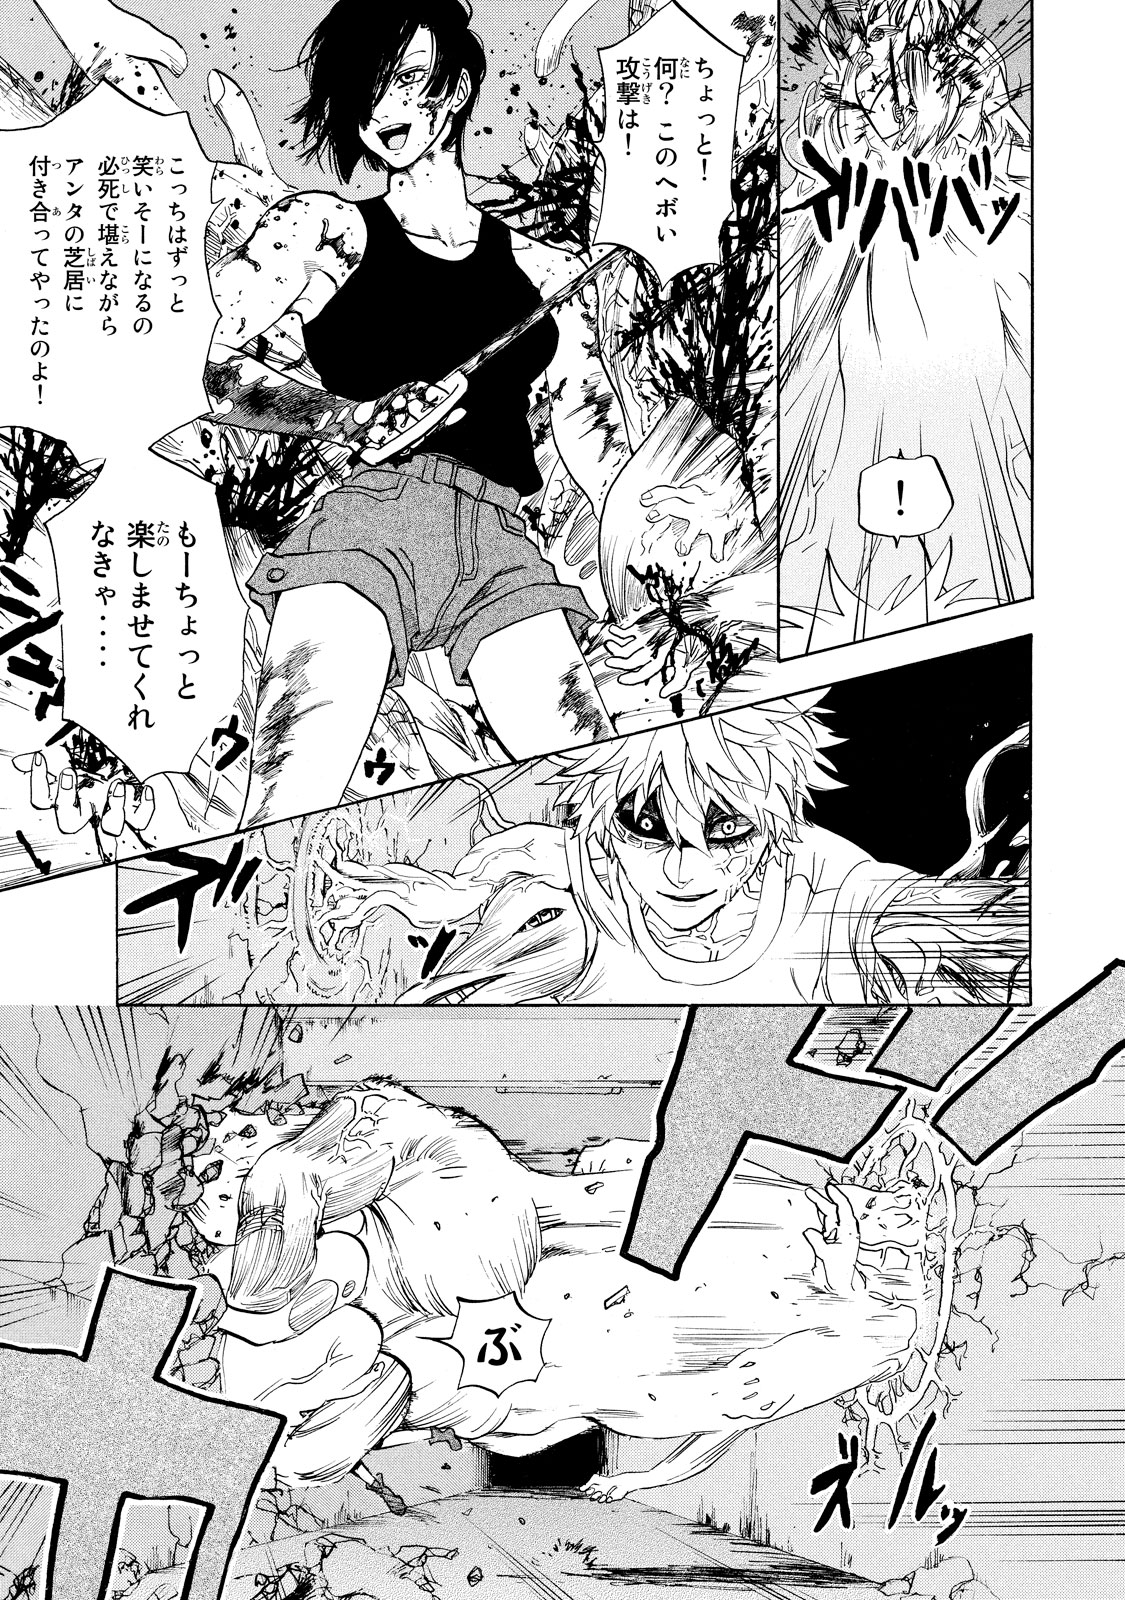 Hataraku Saibou - Chapter 9 - Page 4